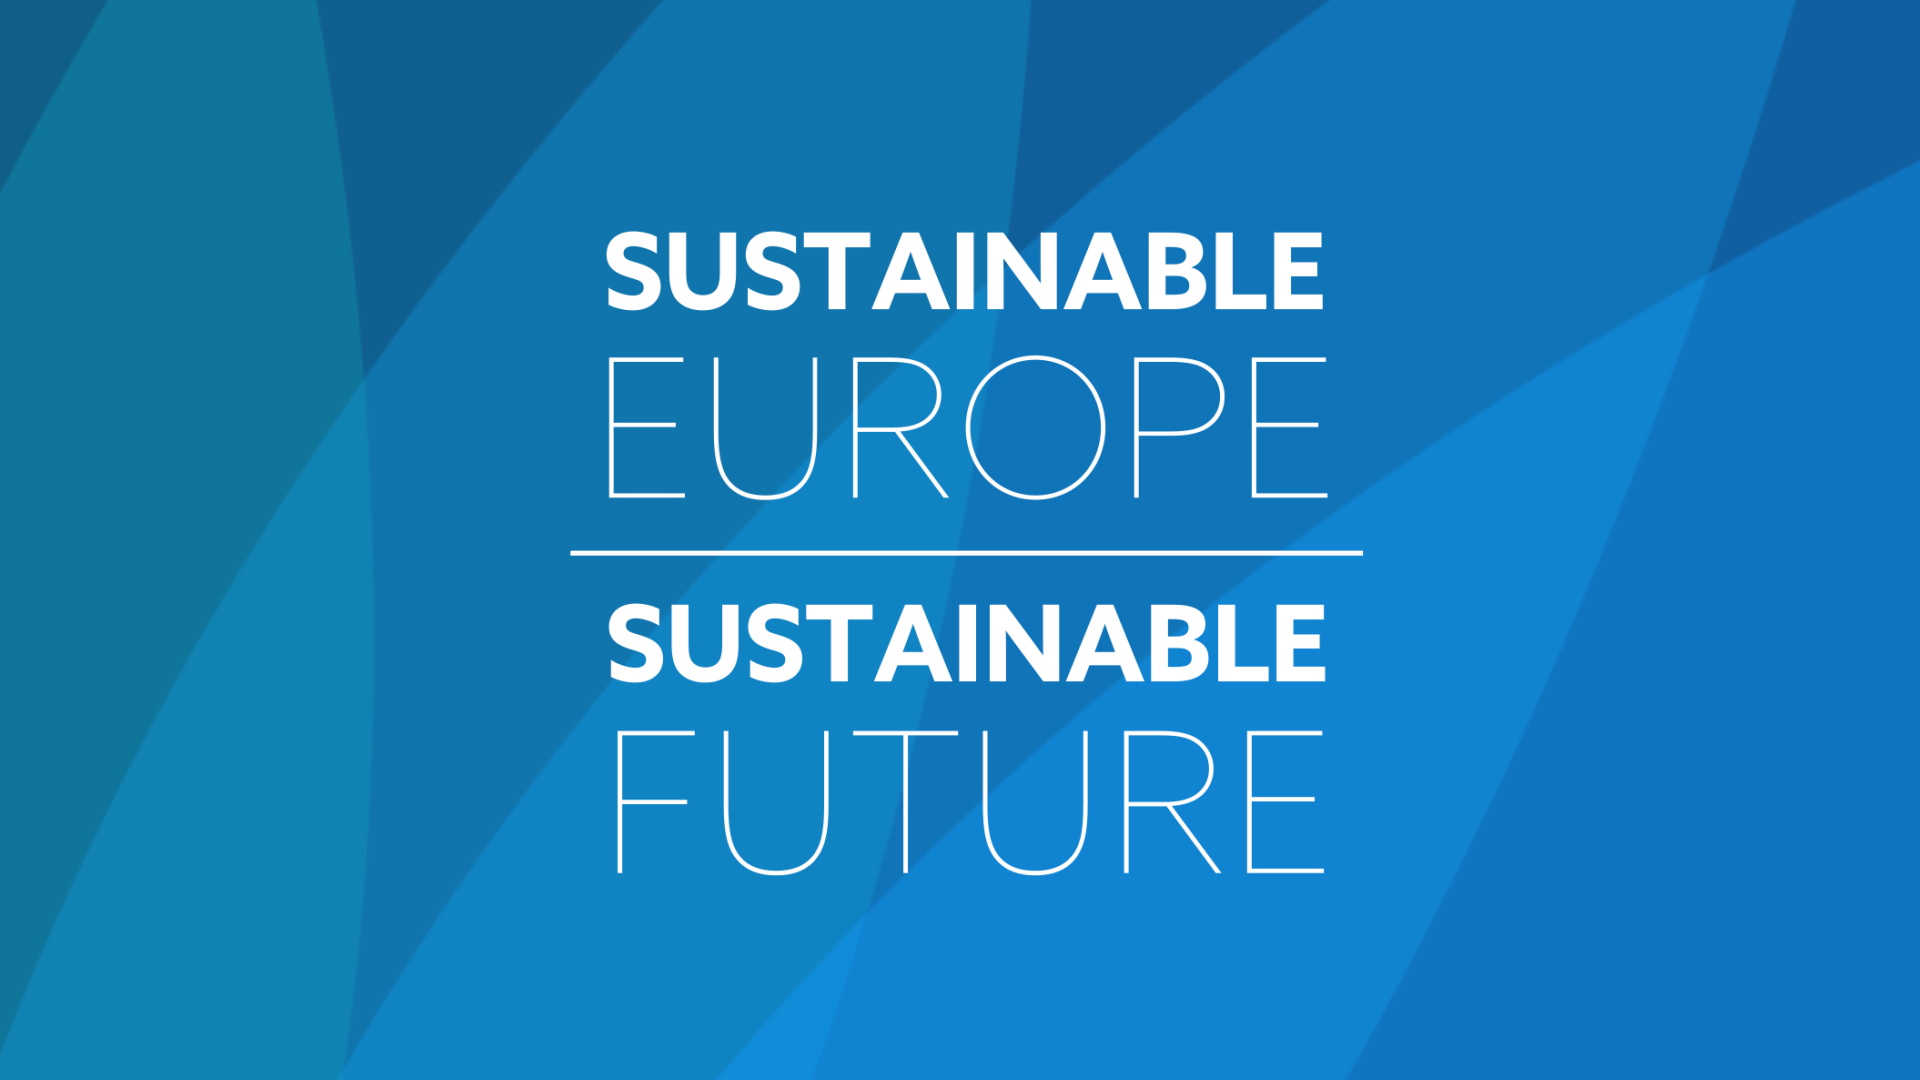 Sustainable Future - Sustainable Europe